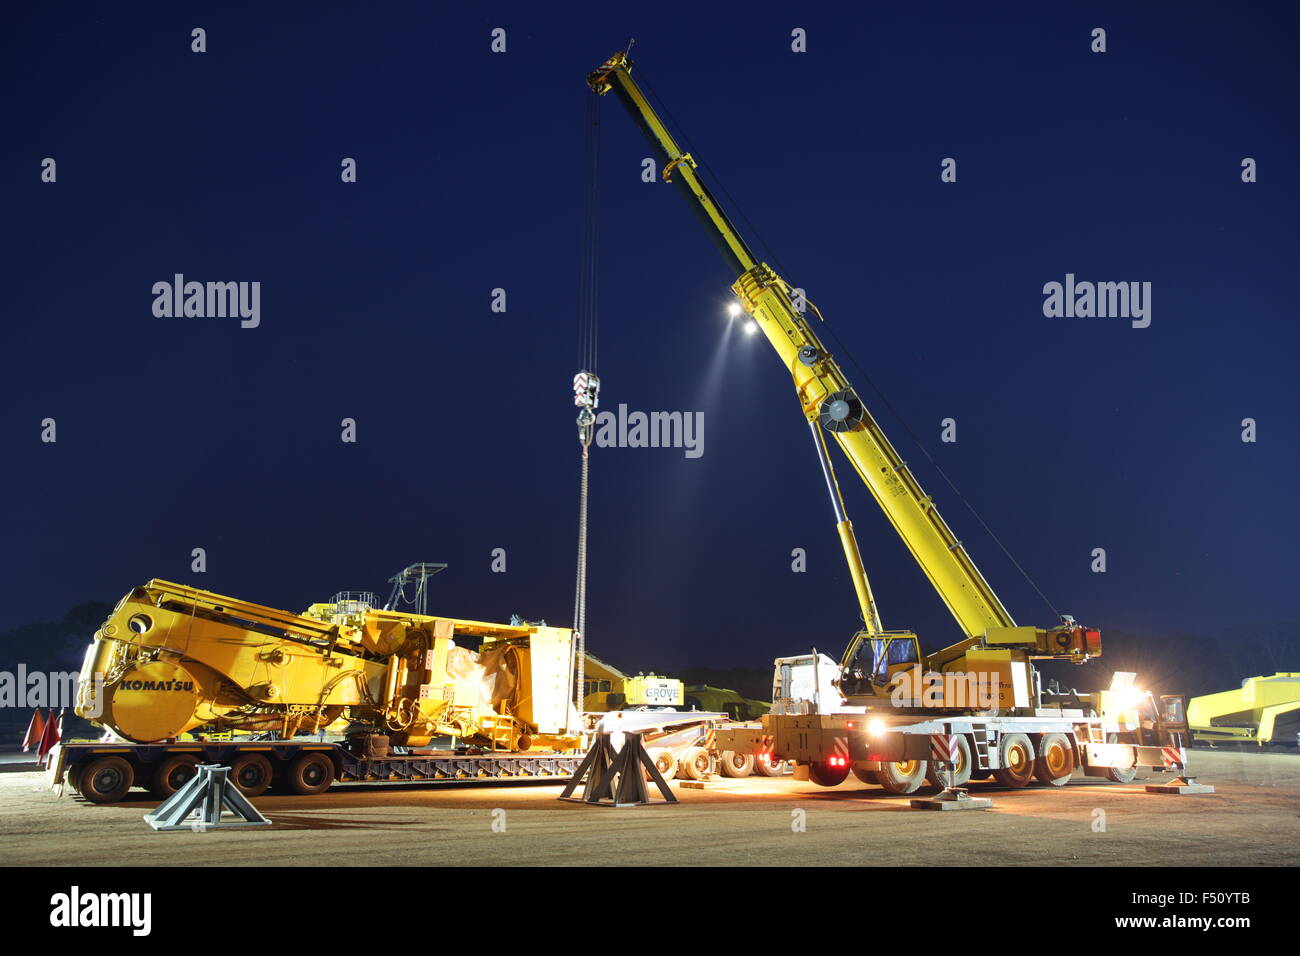 Night crane lift. FQM Copper mining operations in Zambia, Africa. Stock Photo